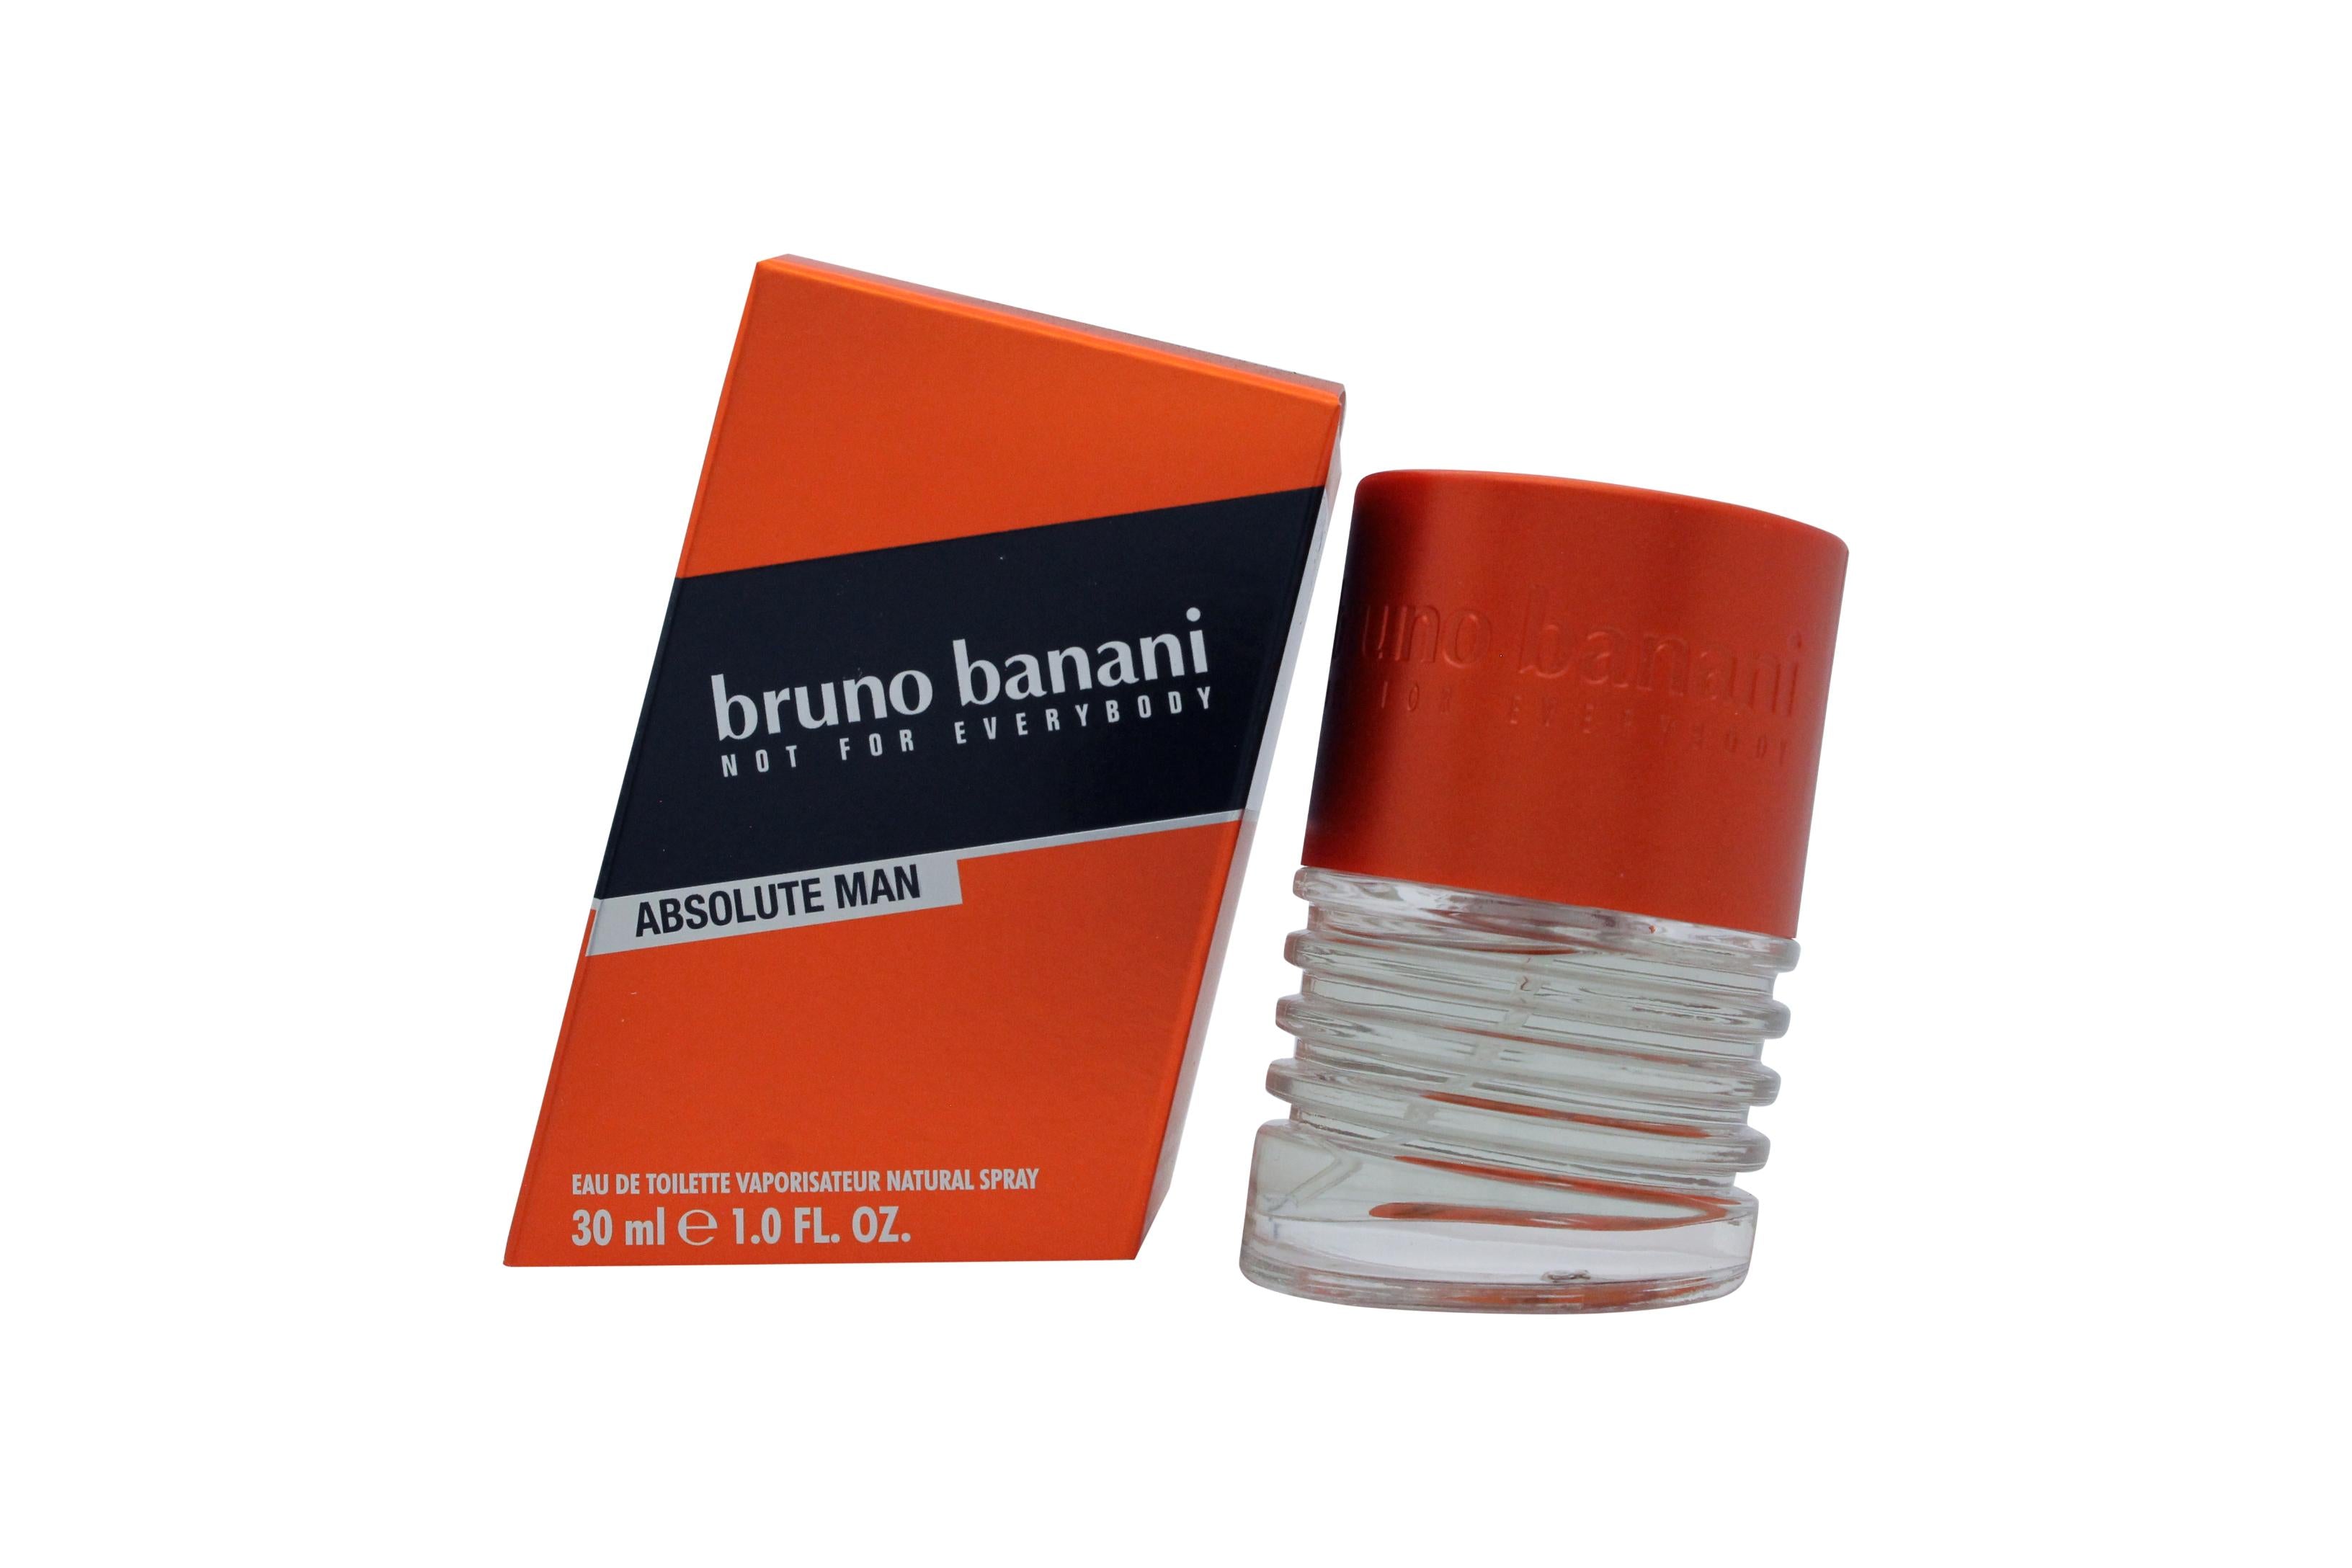 View Bruno Banani Absolute Man Eau de Toilette 30ml Spray information